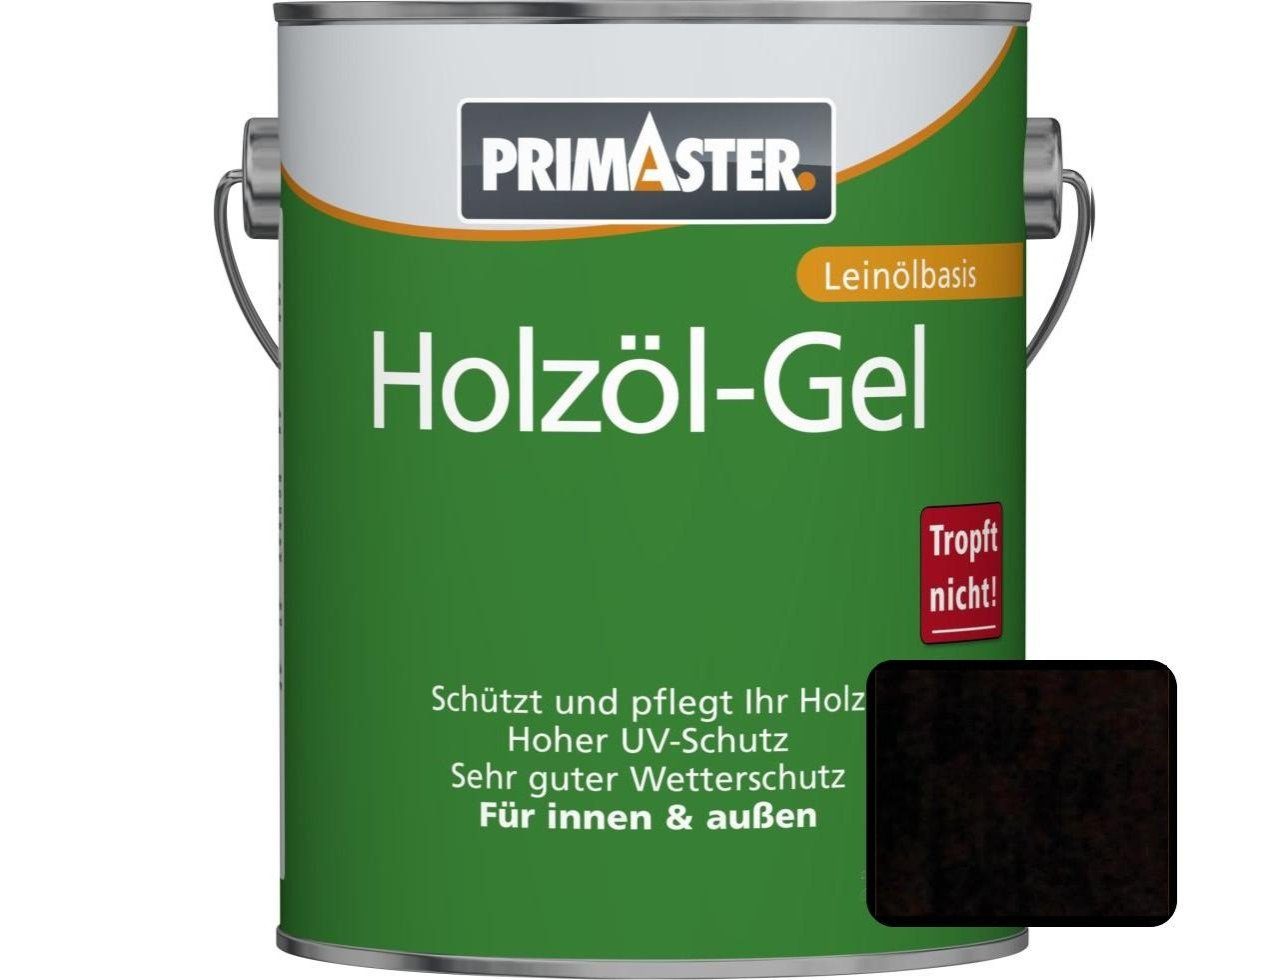 Primaster Hartholzöl Primaster Holzöl-Gel 750 ml palisander